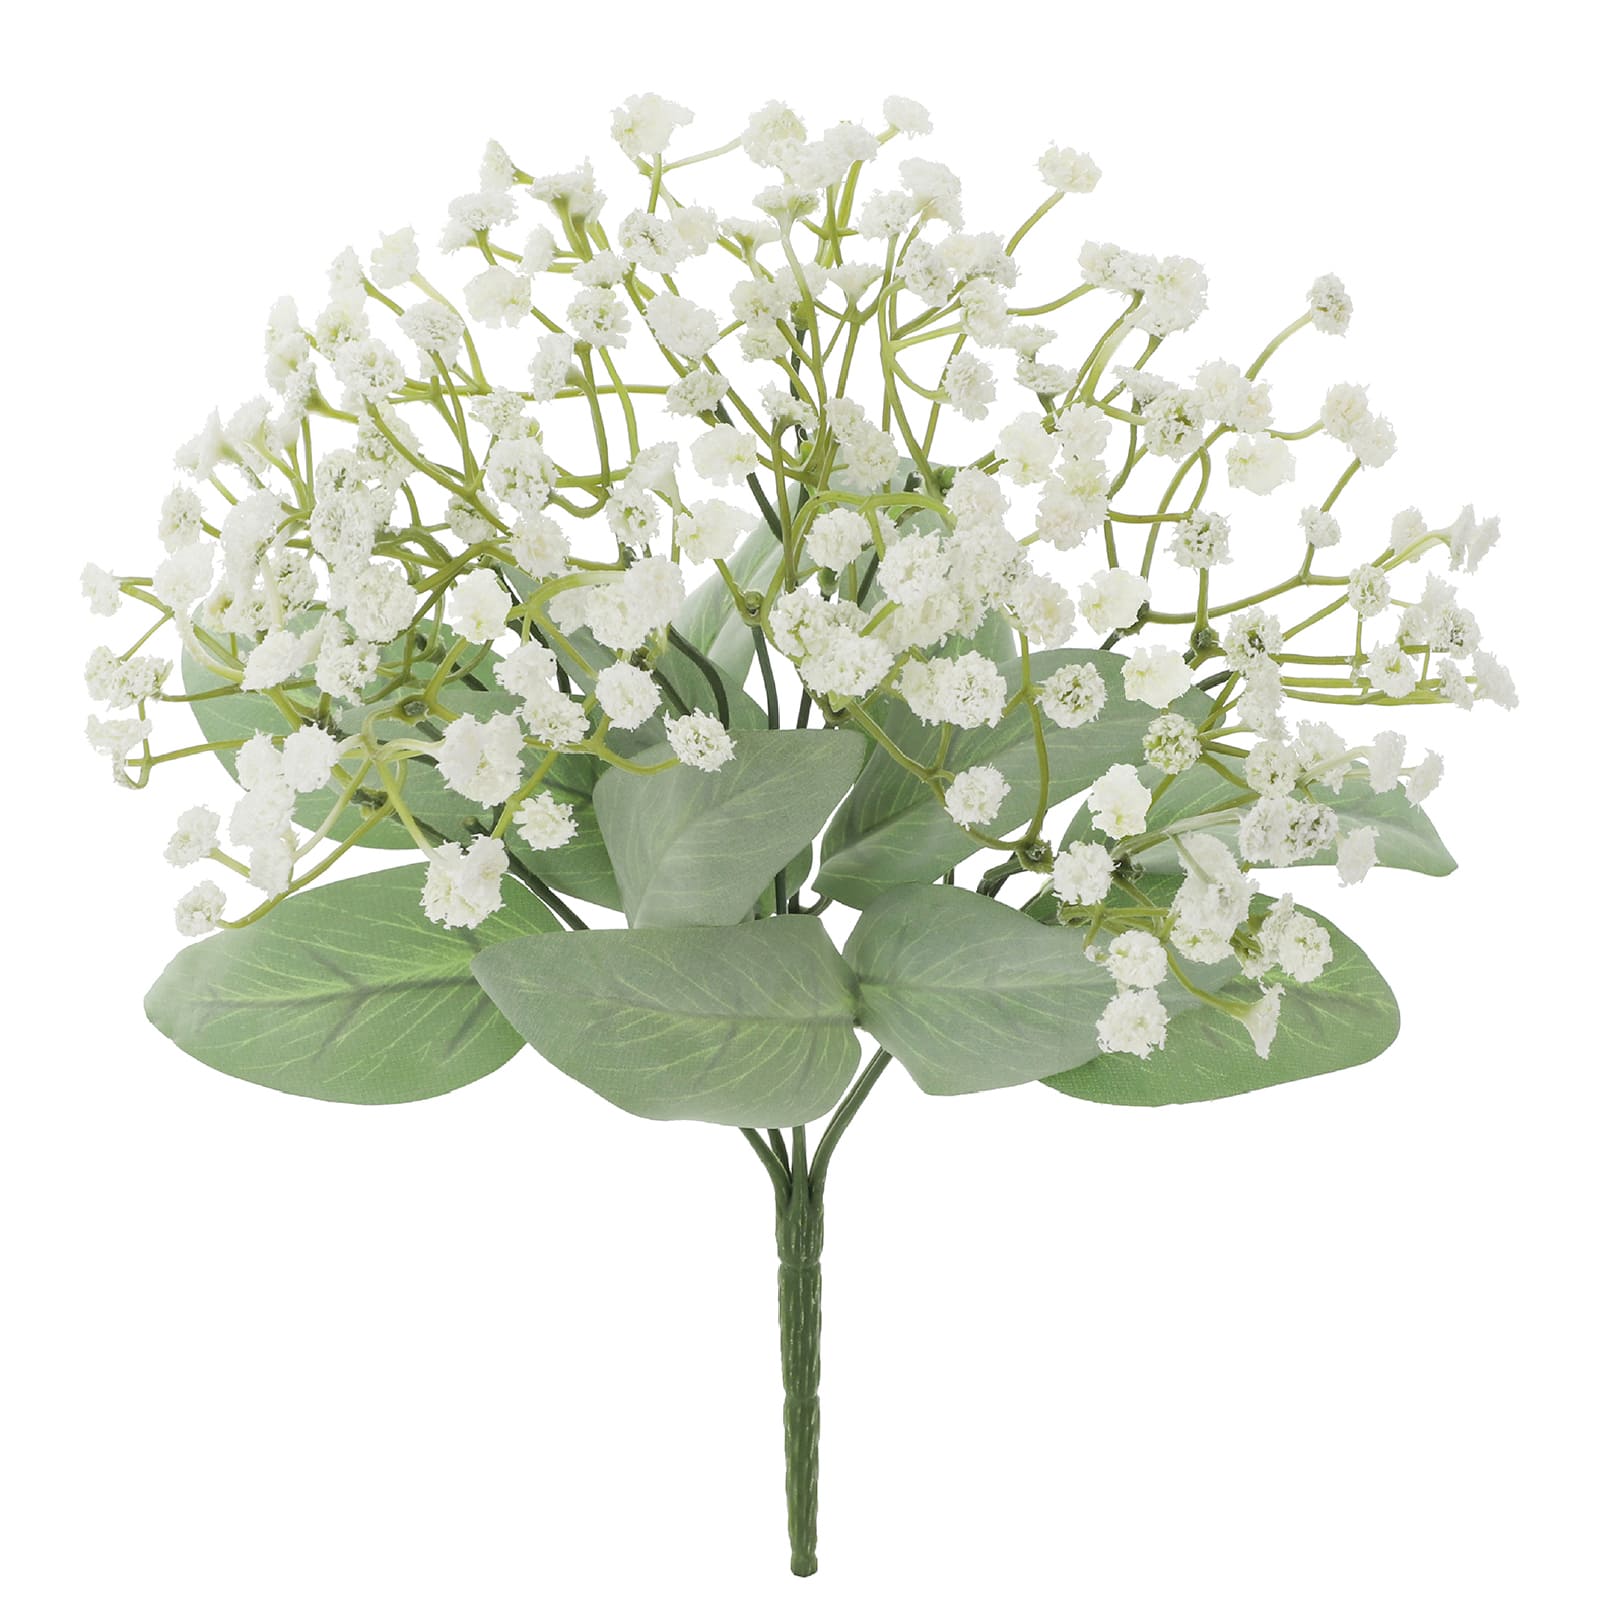 28cm Artificial Plants, Faux Baby's Breath Fake Gypsophila Shrubs  Simulation Greenery Bushes Wedding Centerpieces Table Floral Arrangement  Bouquet Filler